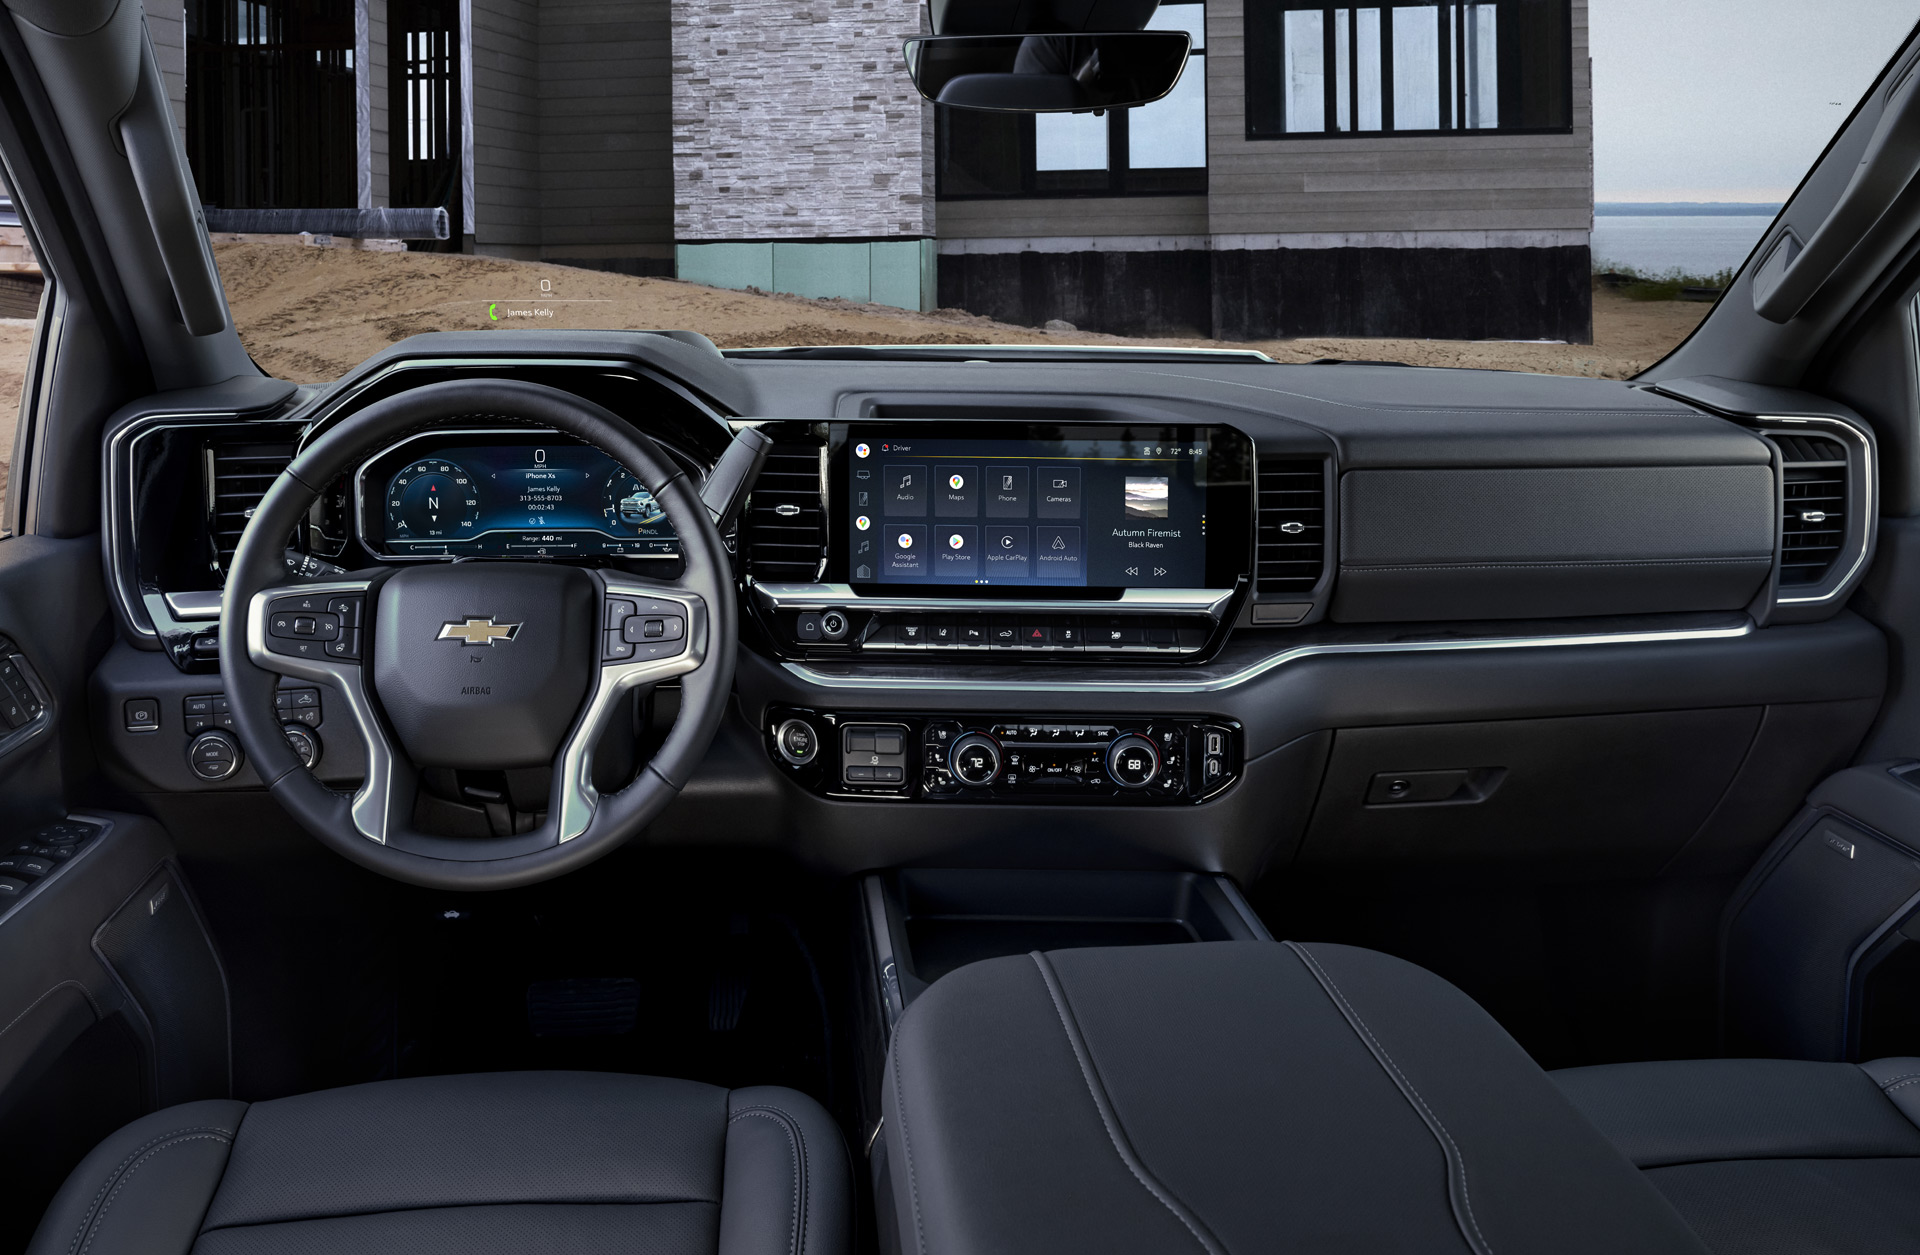 2024 Chevrolet Silverado HD upgrades interior, adds ZR2 option All